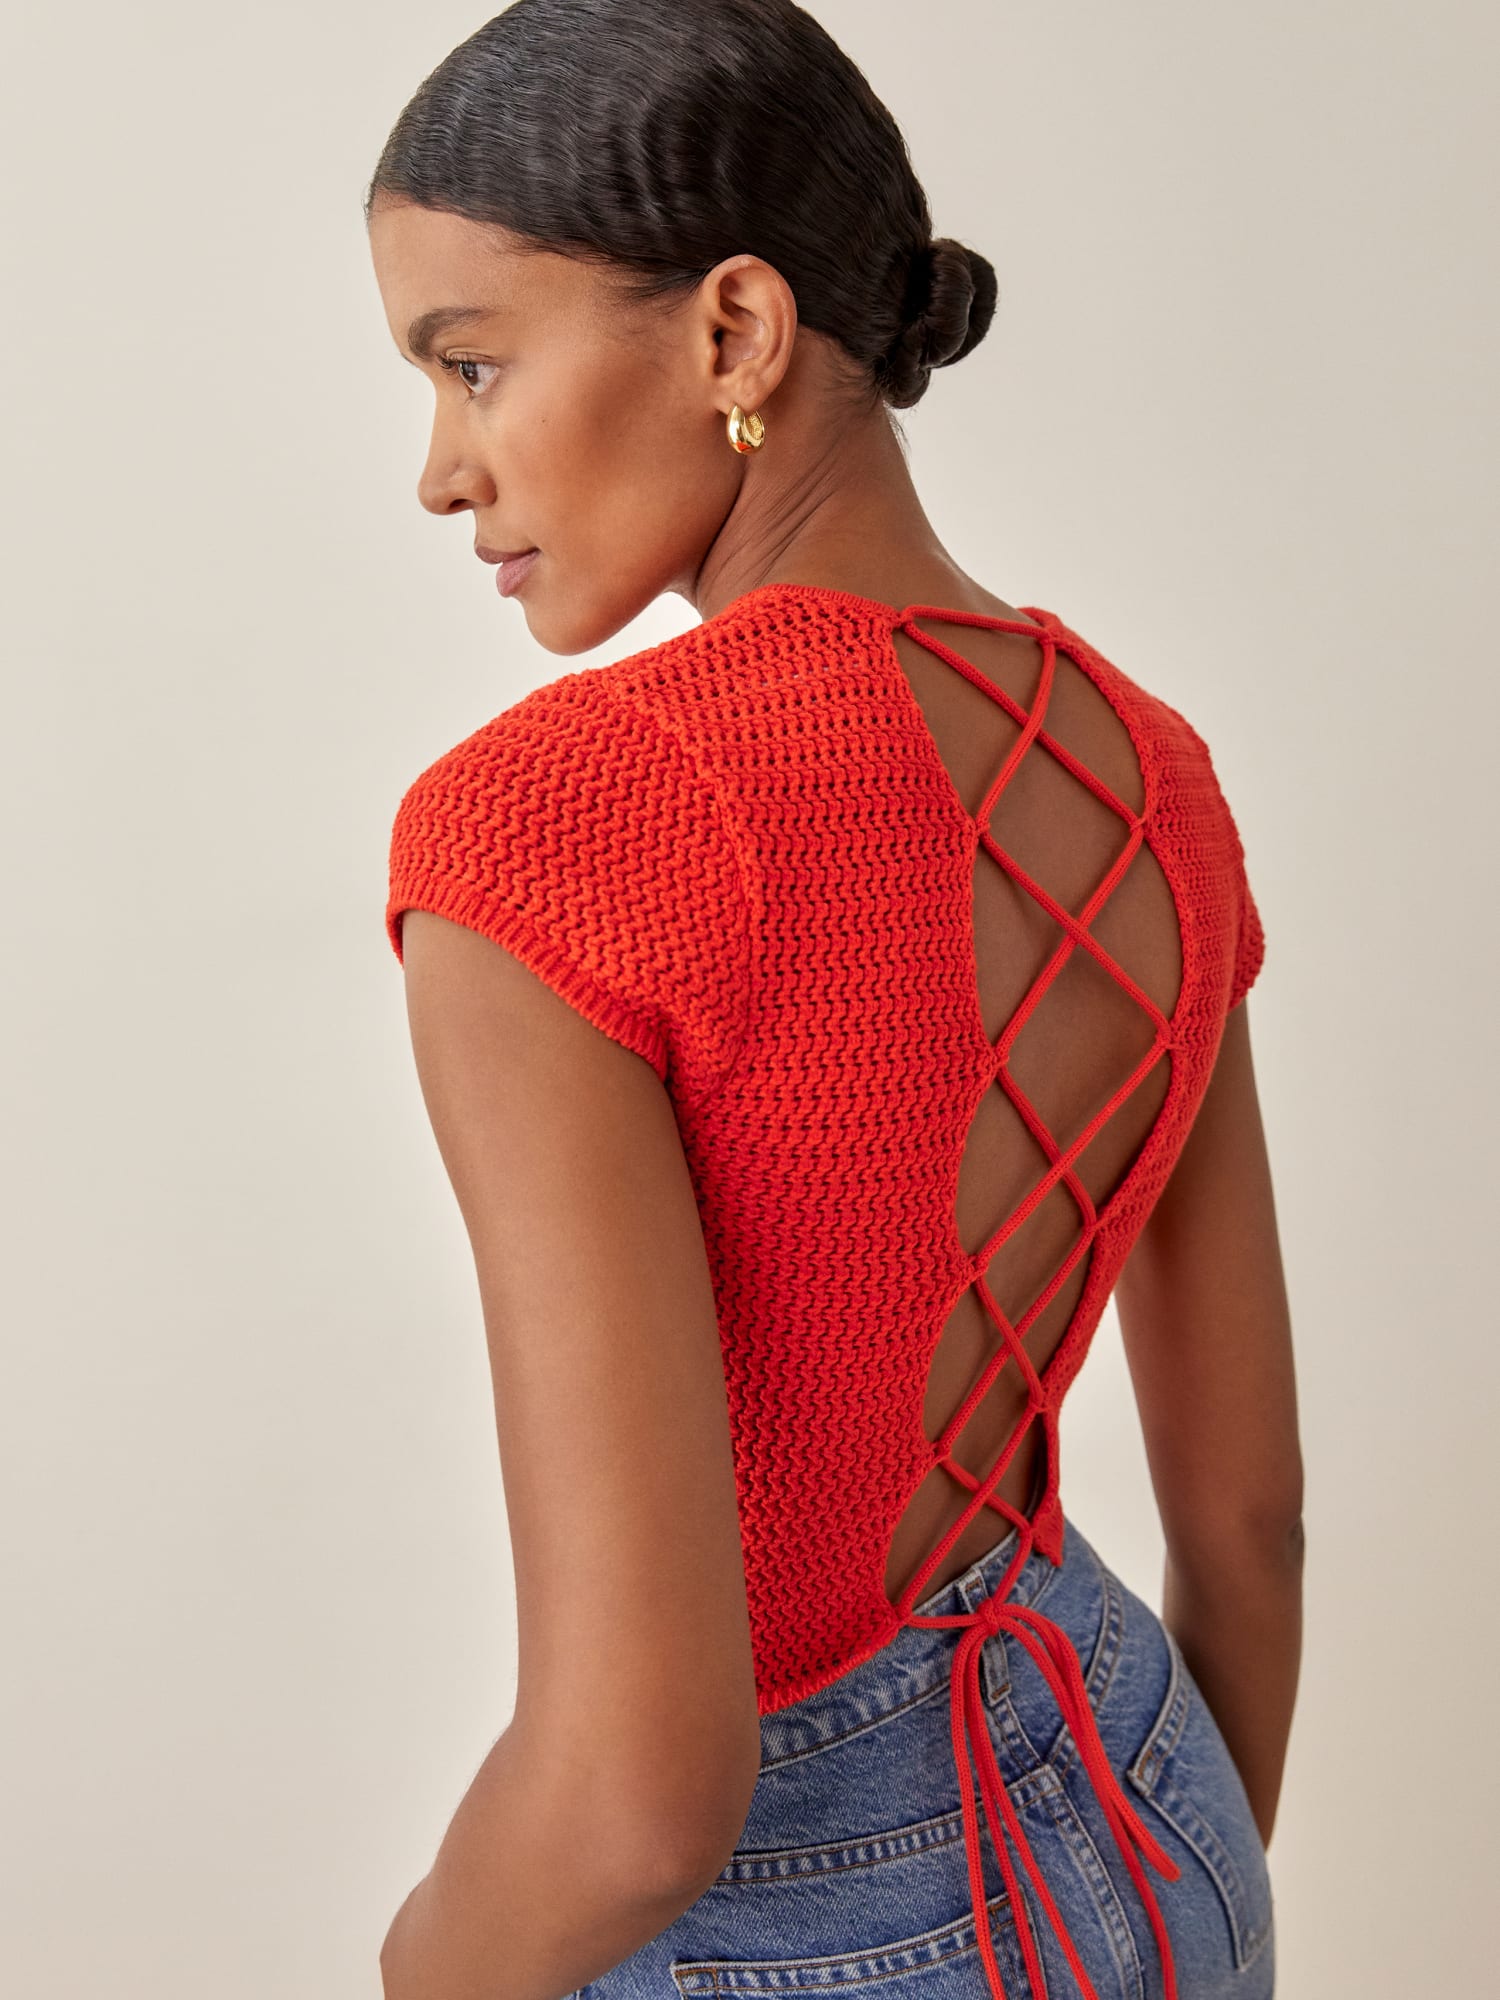 Sleek Knit Twist Front Top - Fabletics